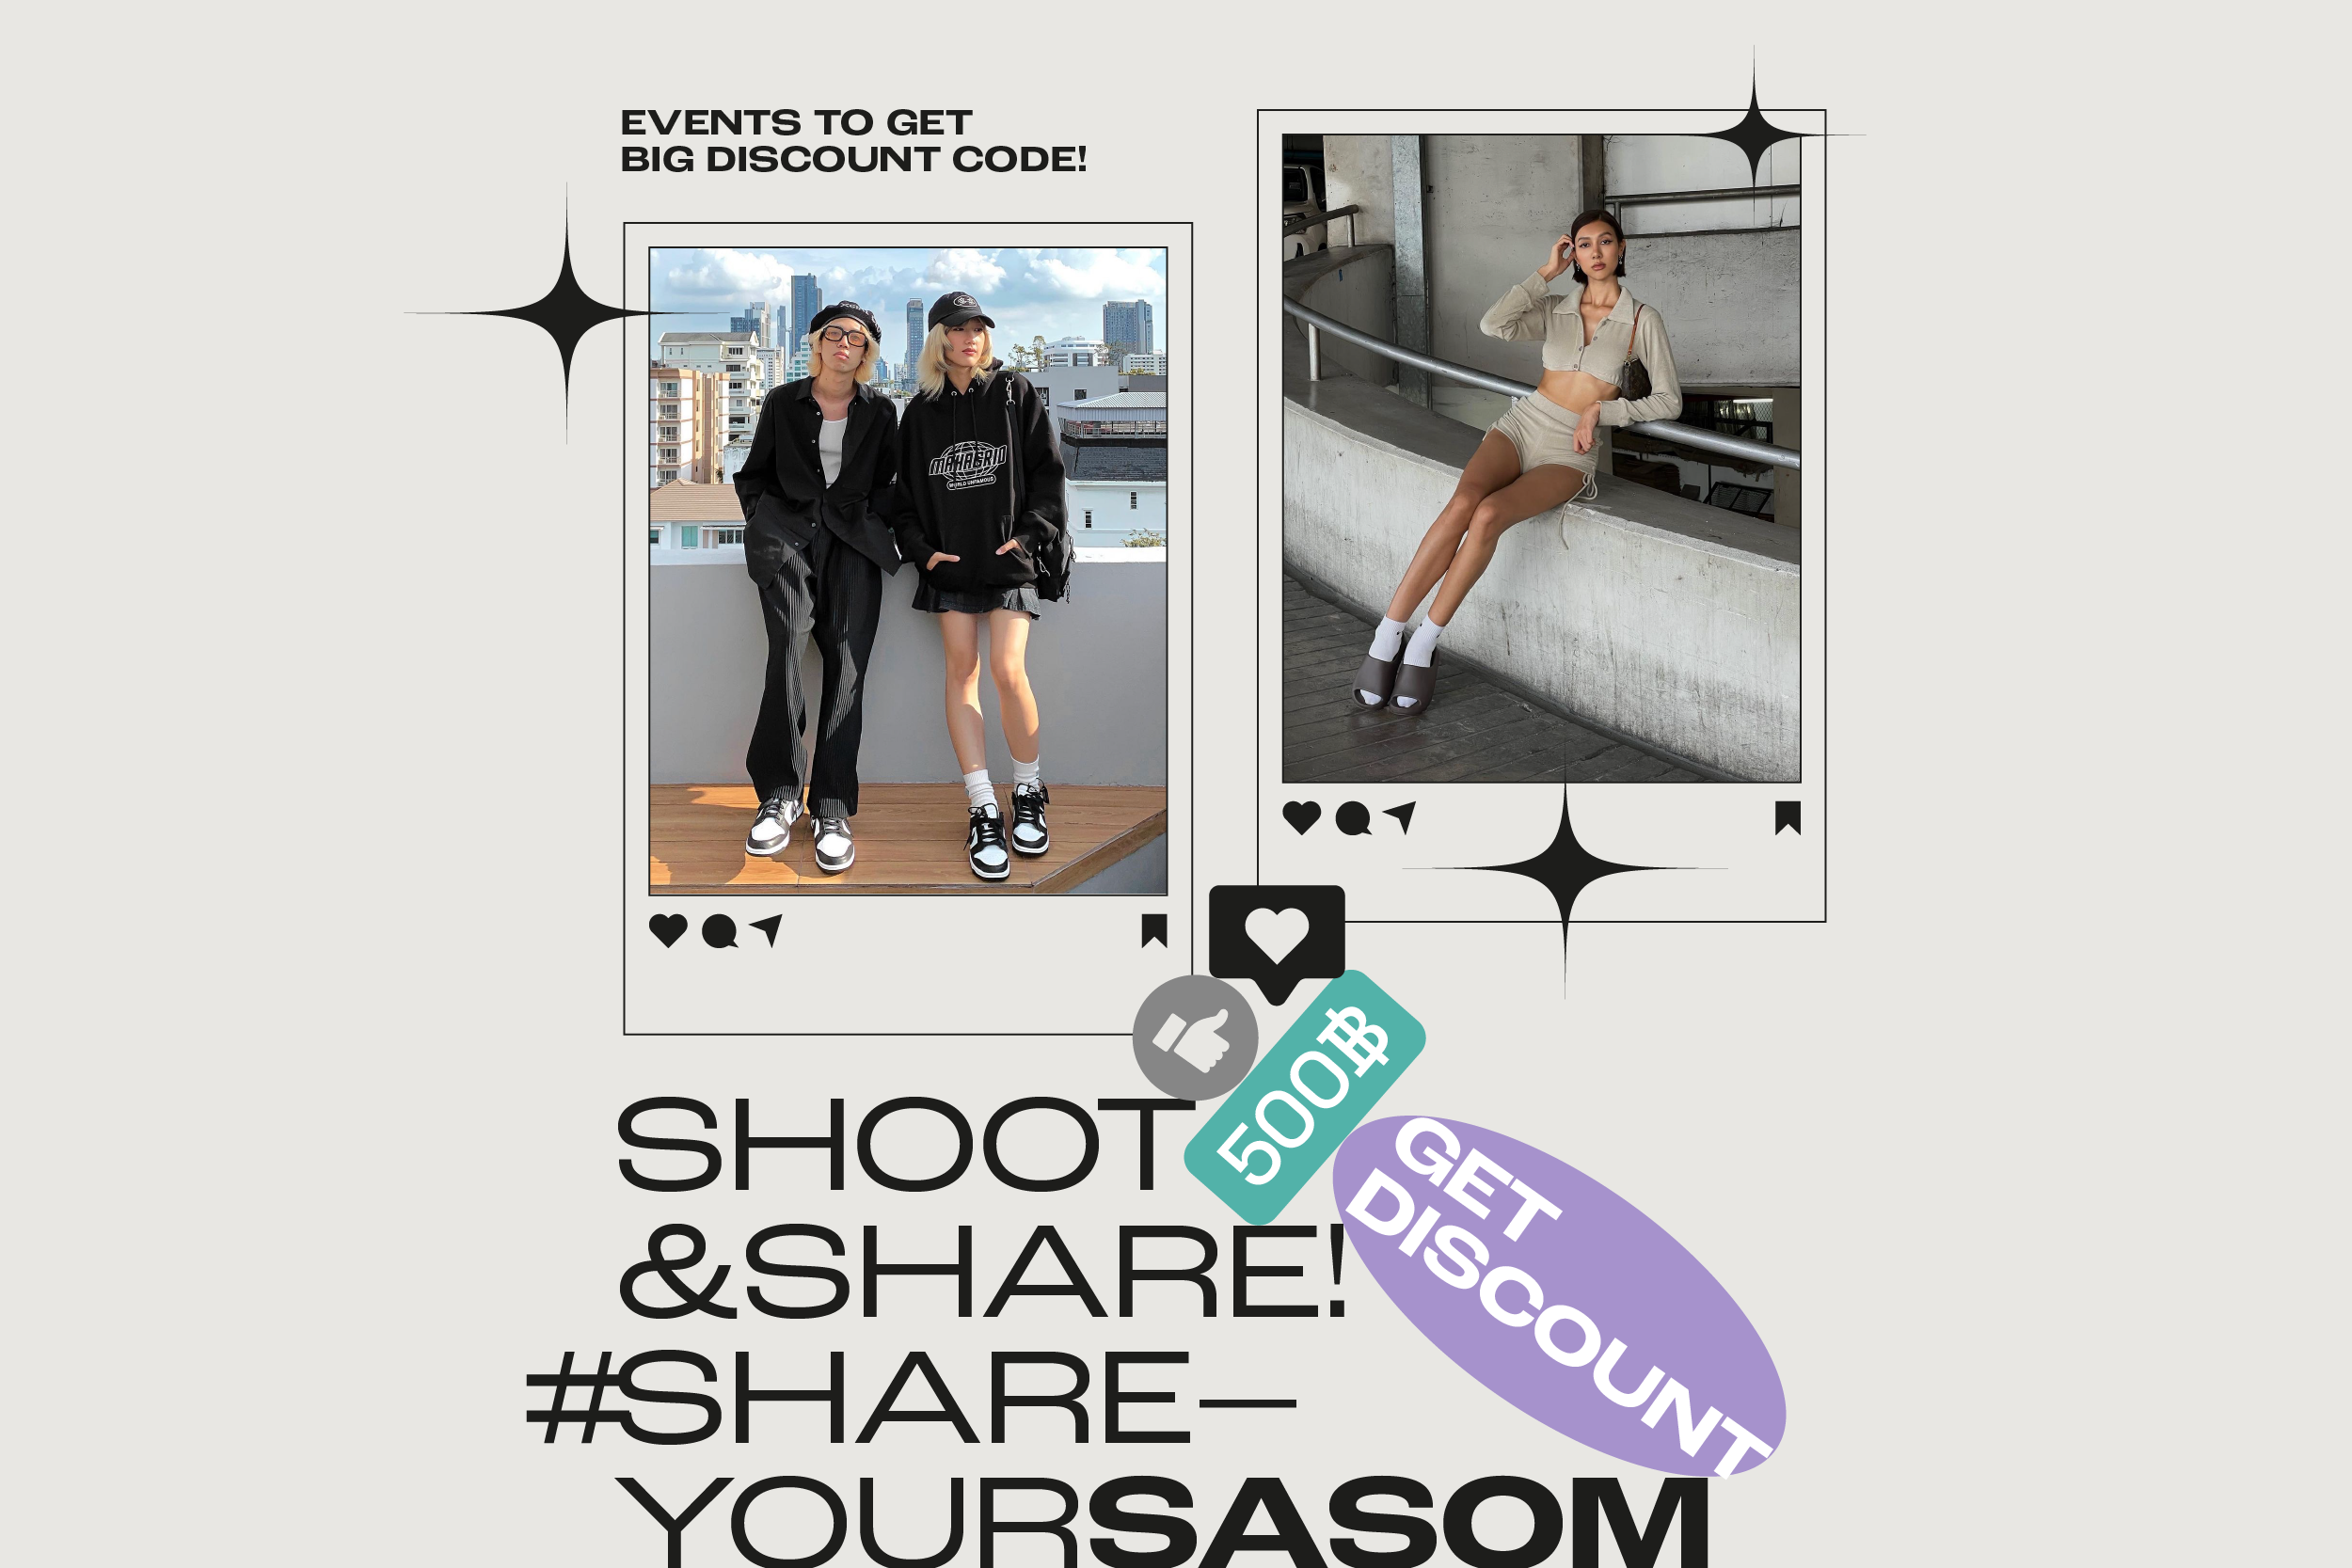 Shoot&Share! ShareyourSASOM events to get Big Discount Code!